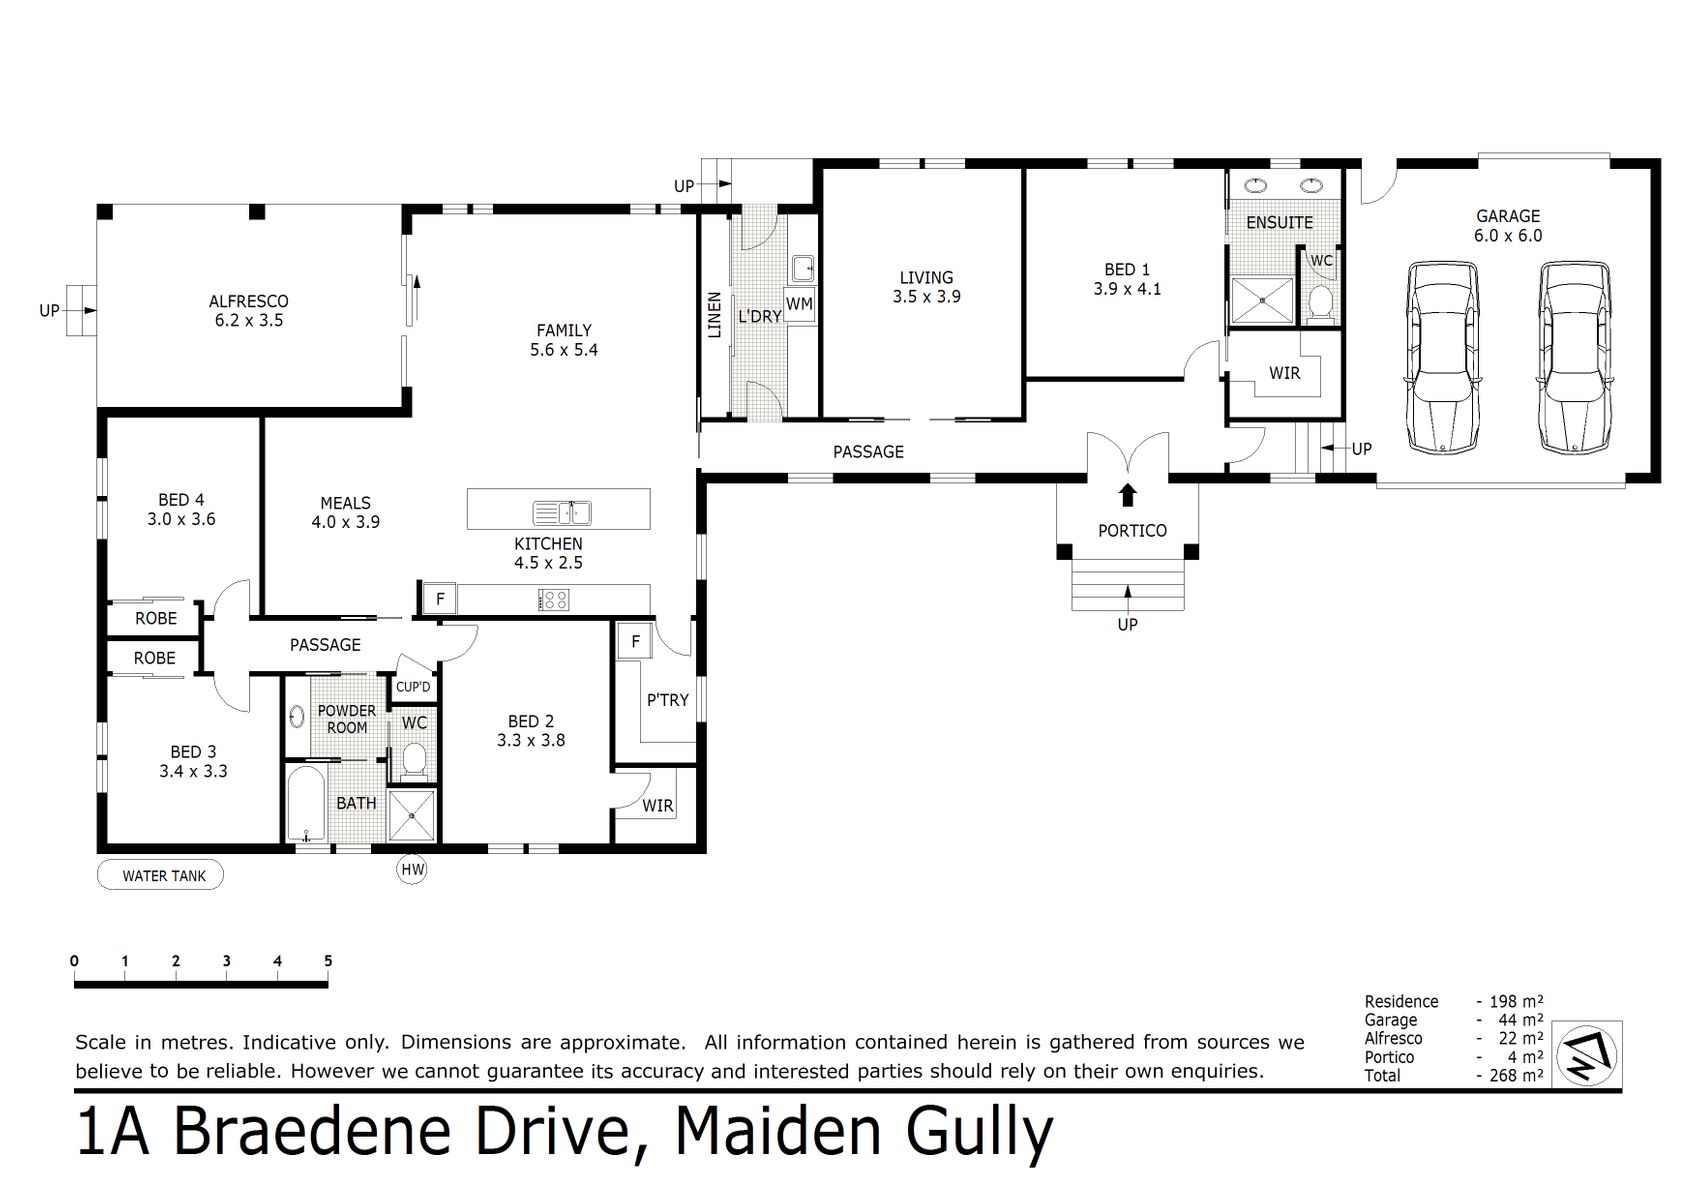 1A Braedene Drive Maiden Gully (23 NOV 2020) 242sqm (1)